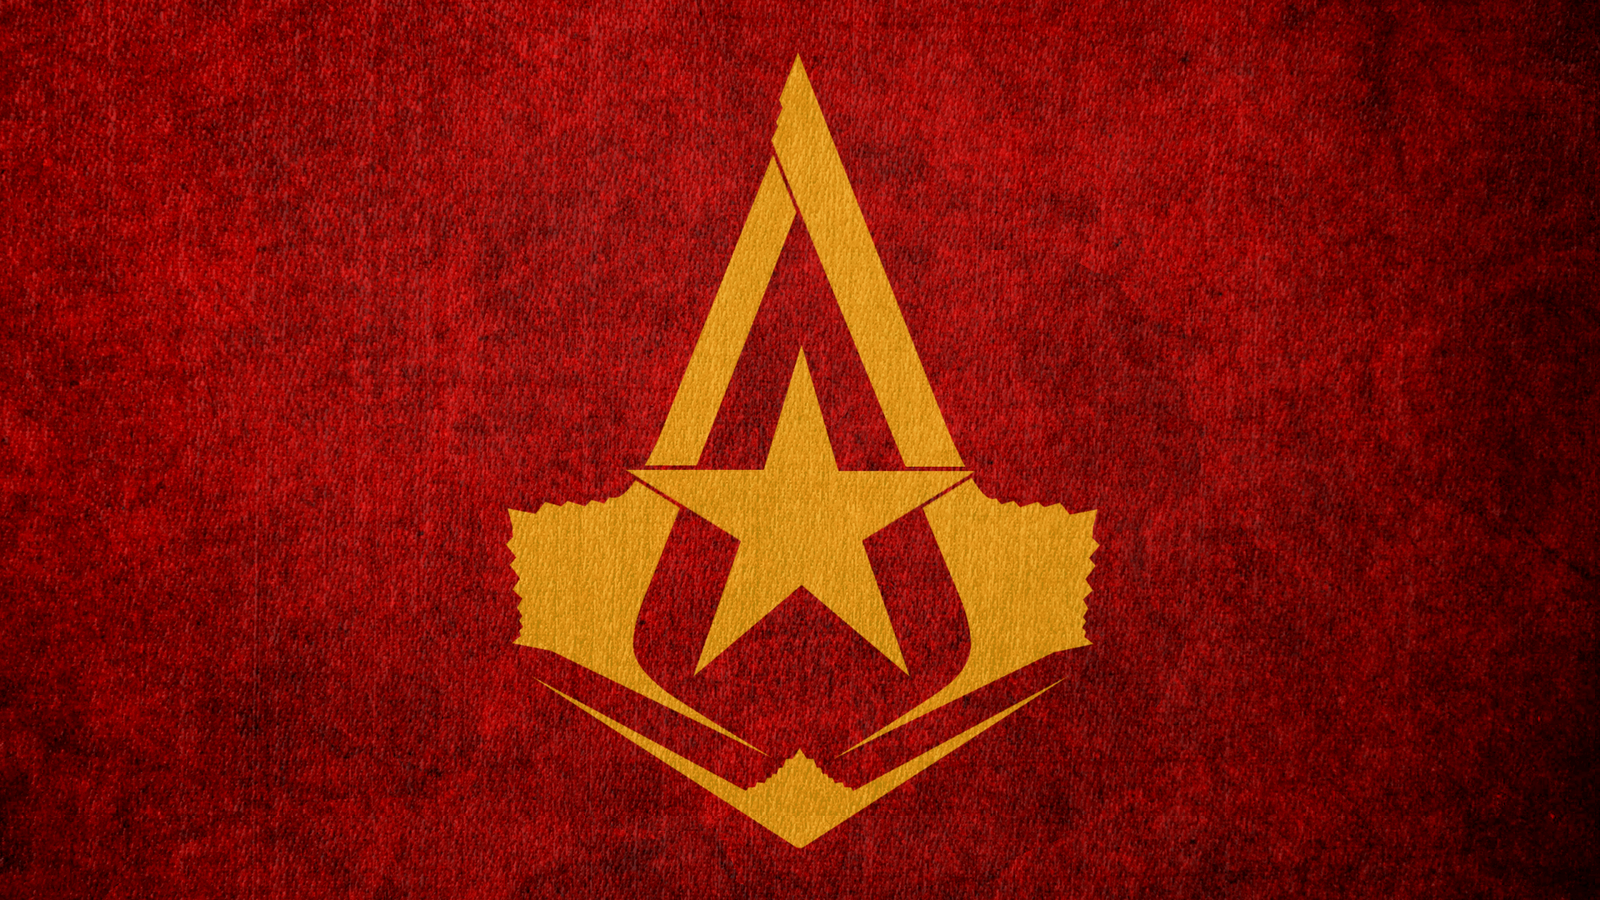 Assassins Creed IV Black Flag - Wallpaper by okiir on DeviantArt